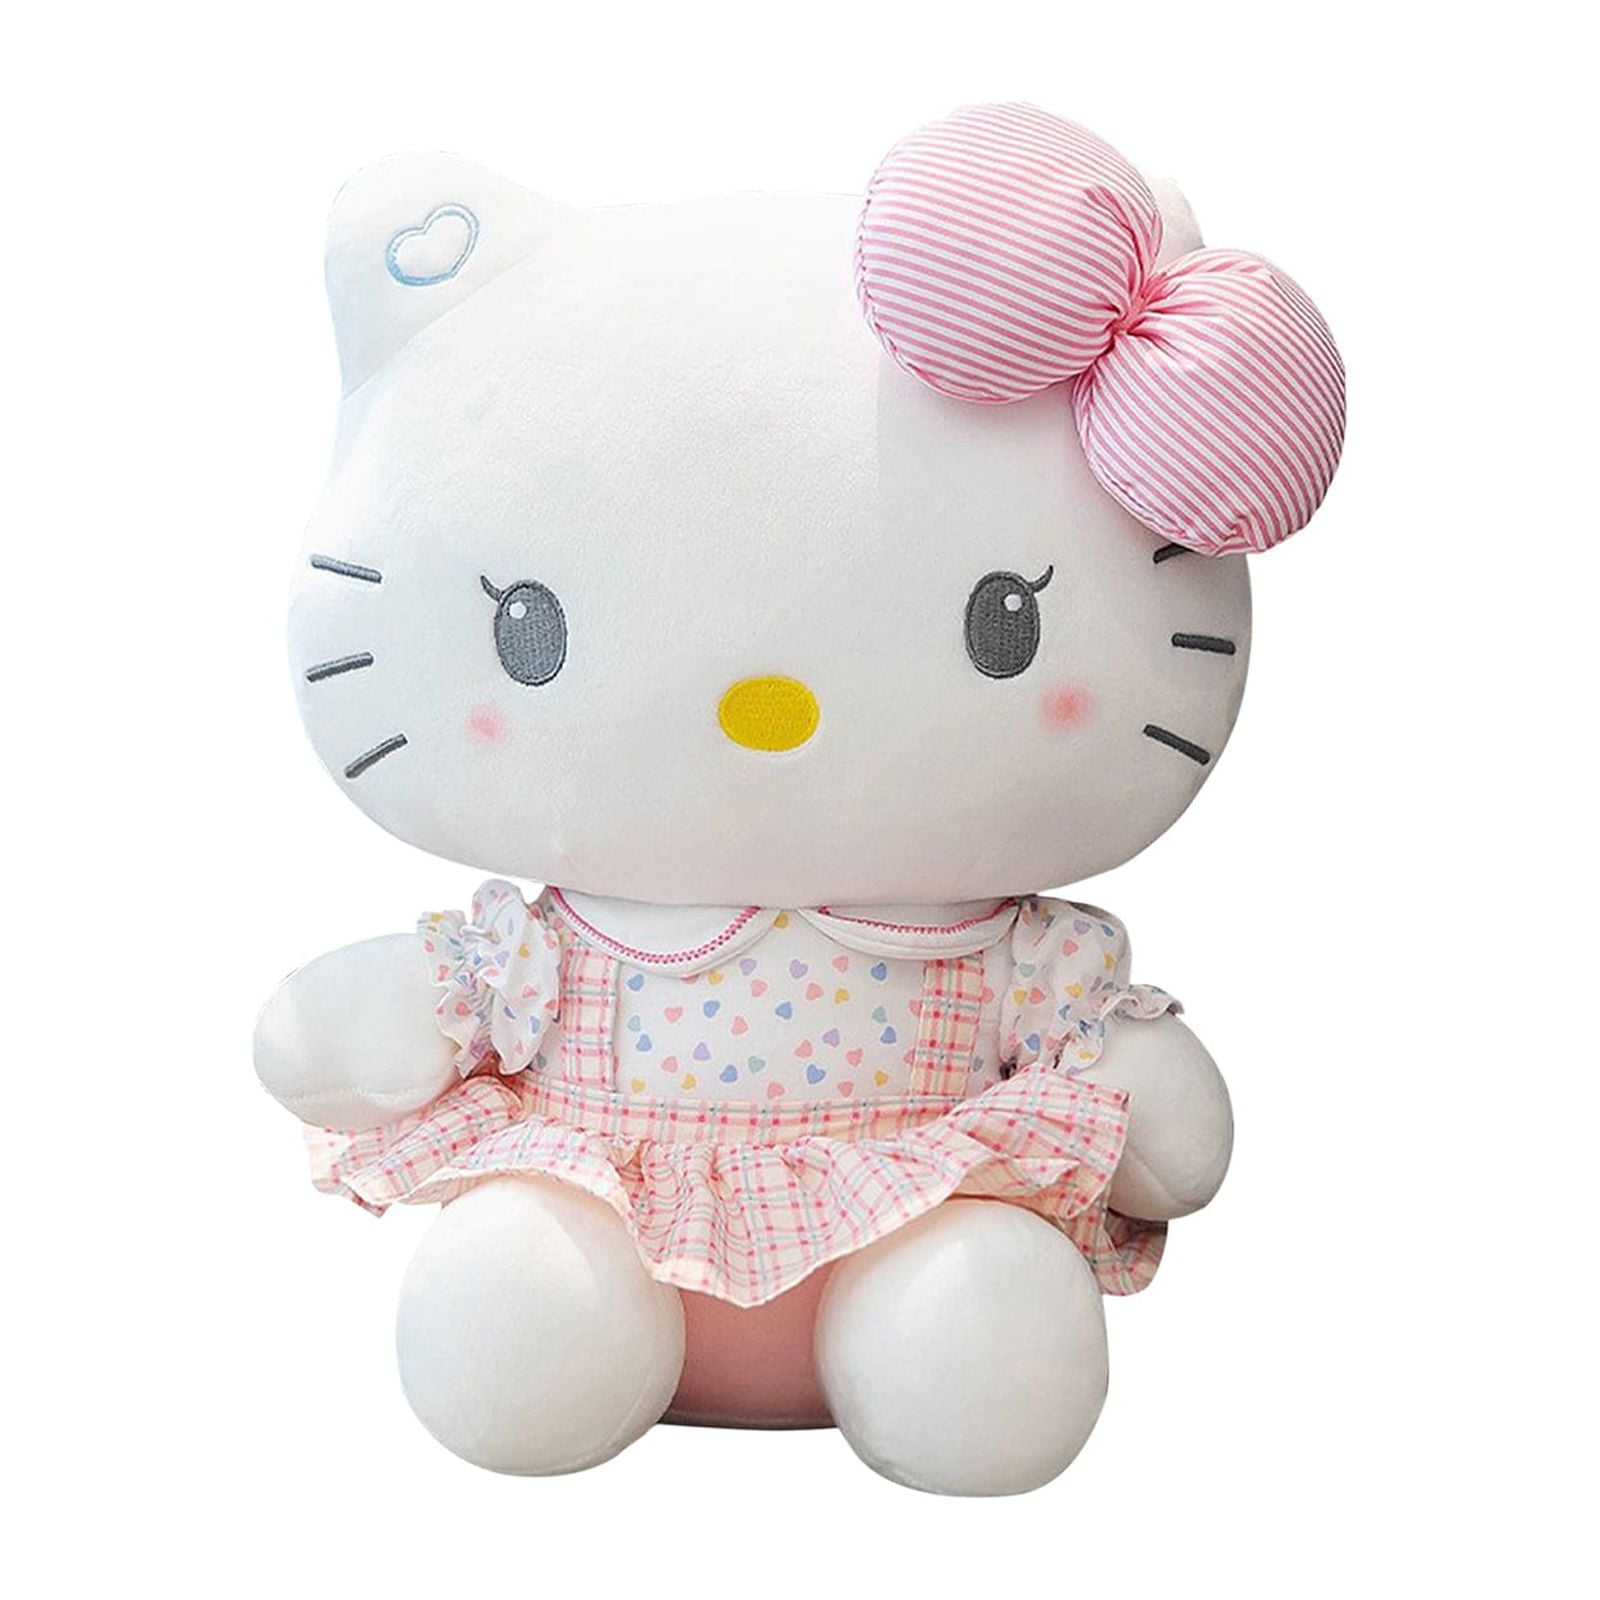 Sanrio Hello Kitty and Friends Plush Doll (8-in / 20.32-cm), So